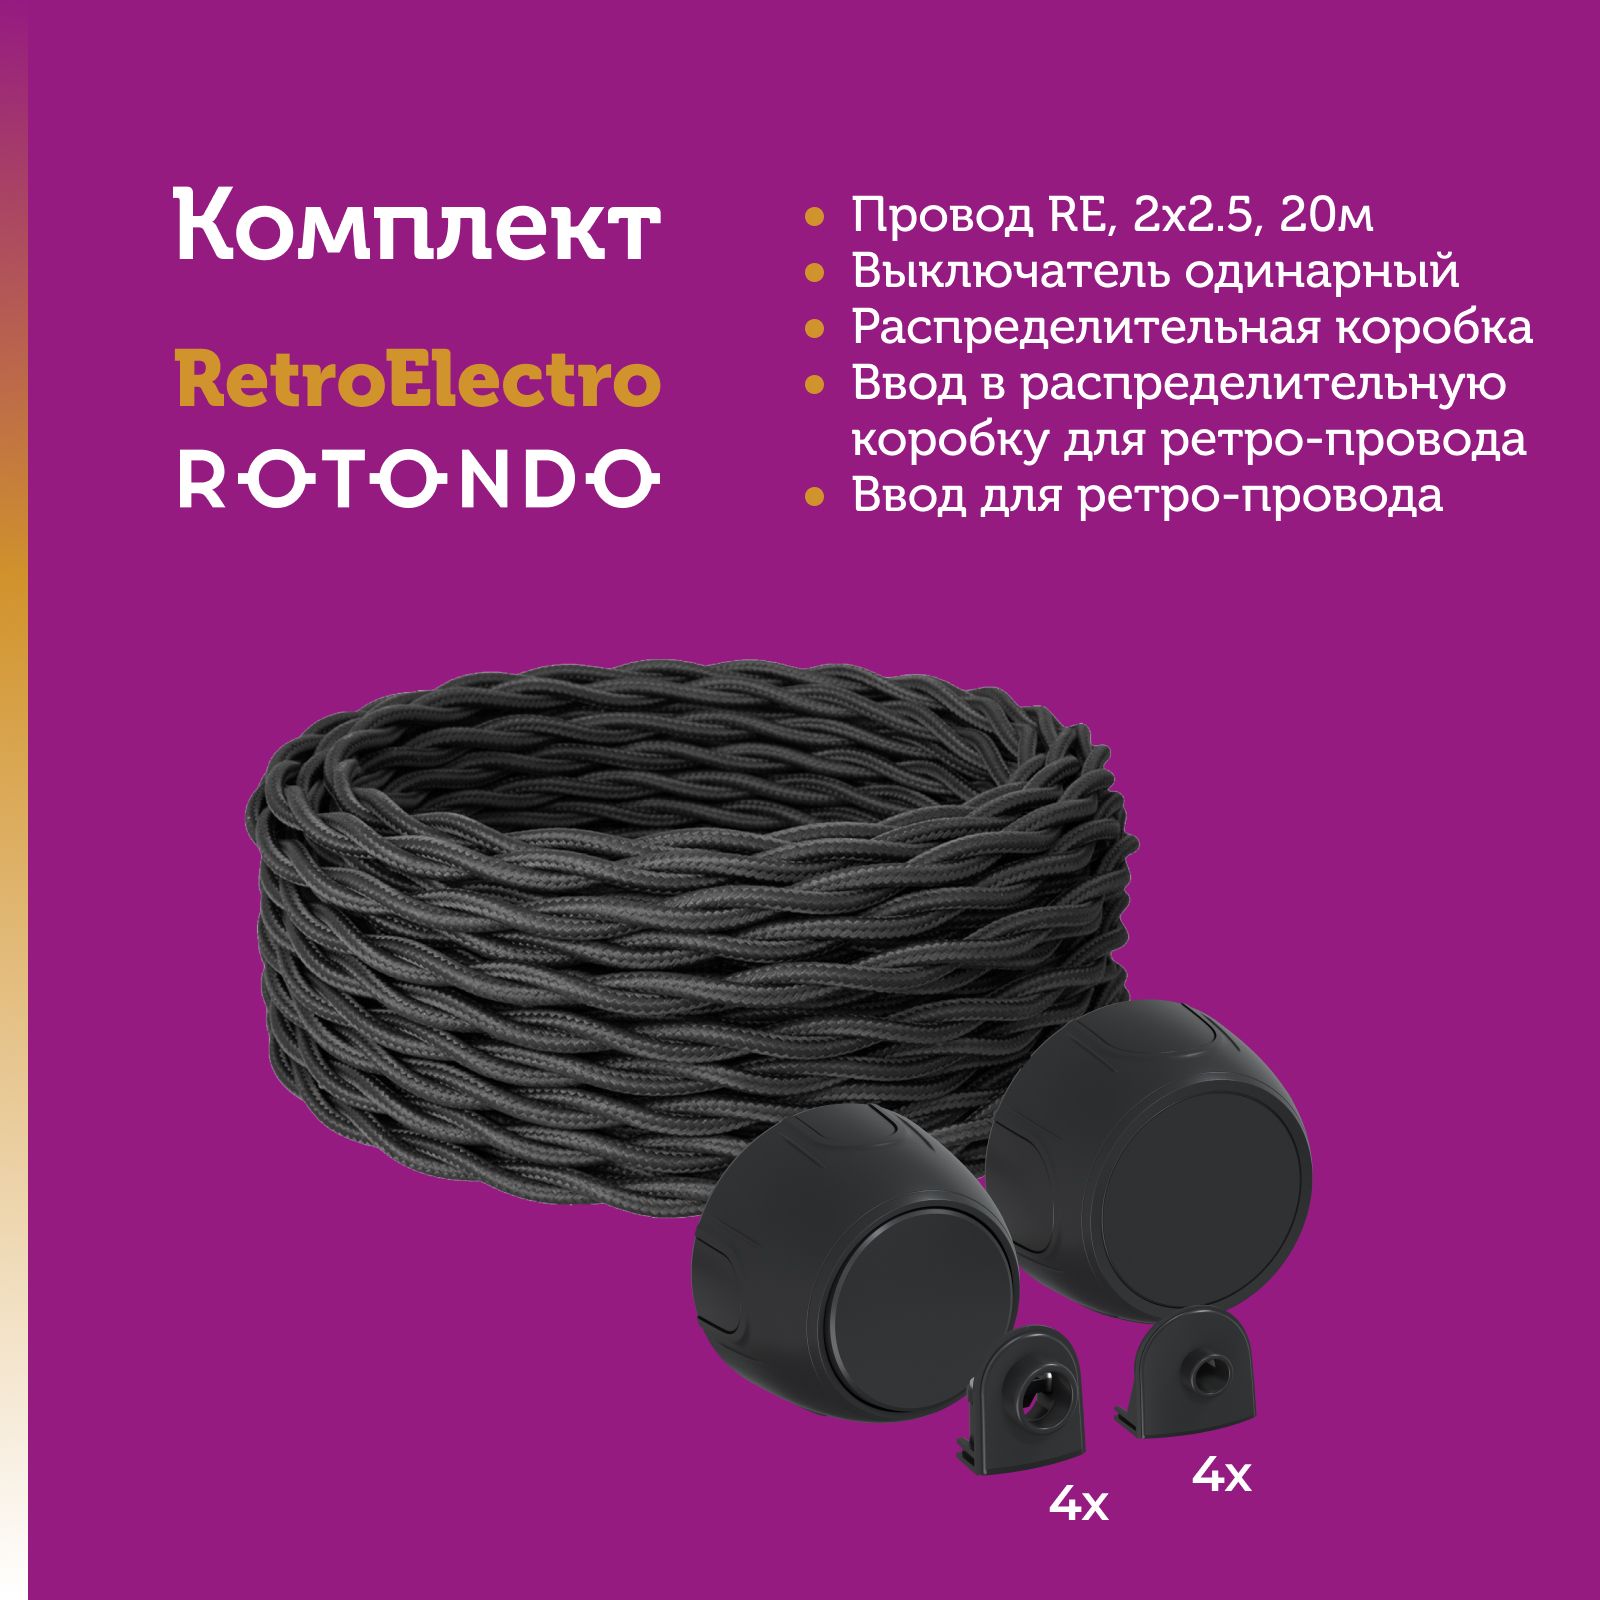 Комплект. Кабель Retro Electro и электроустановочные изделия Rotondo (OneKeyElectro)